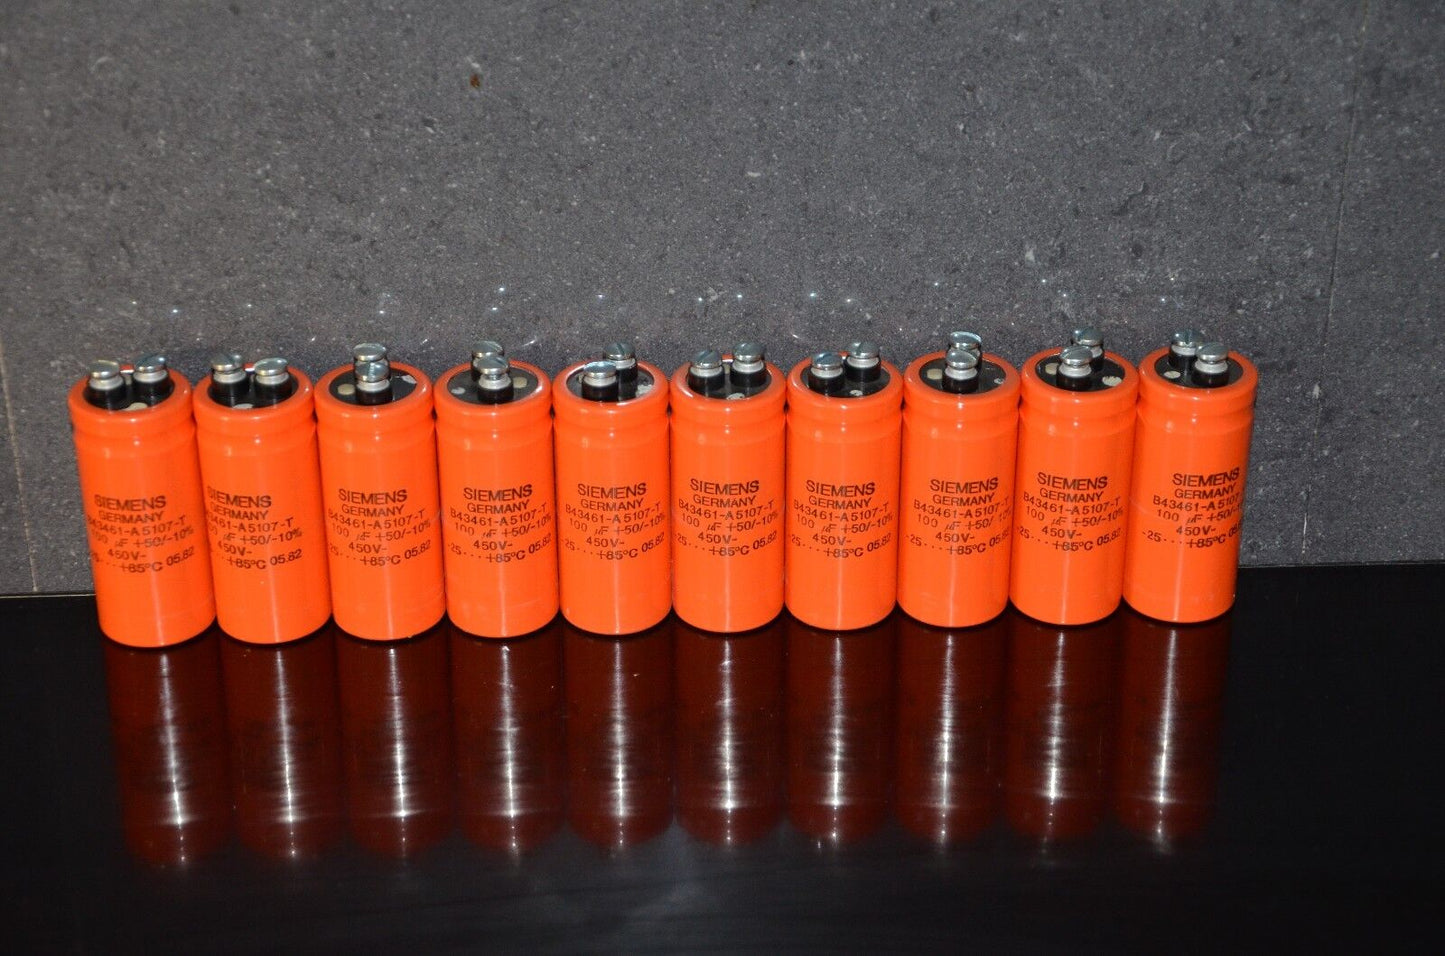 One vintage NOS electrolytic capacitor 100uF 450V Siemens Orange Can W. Germany